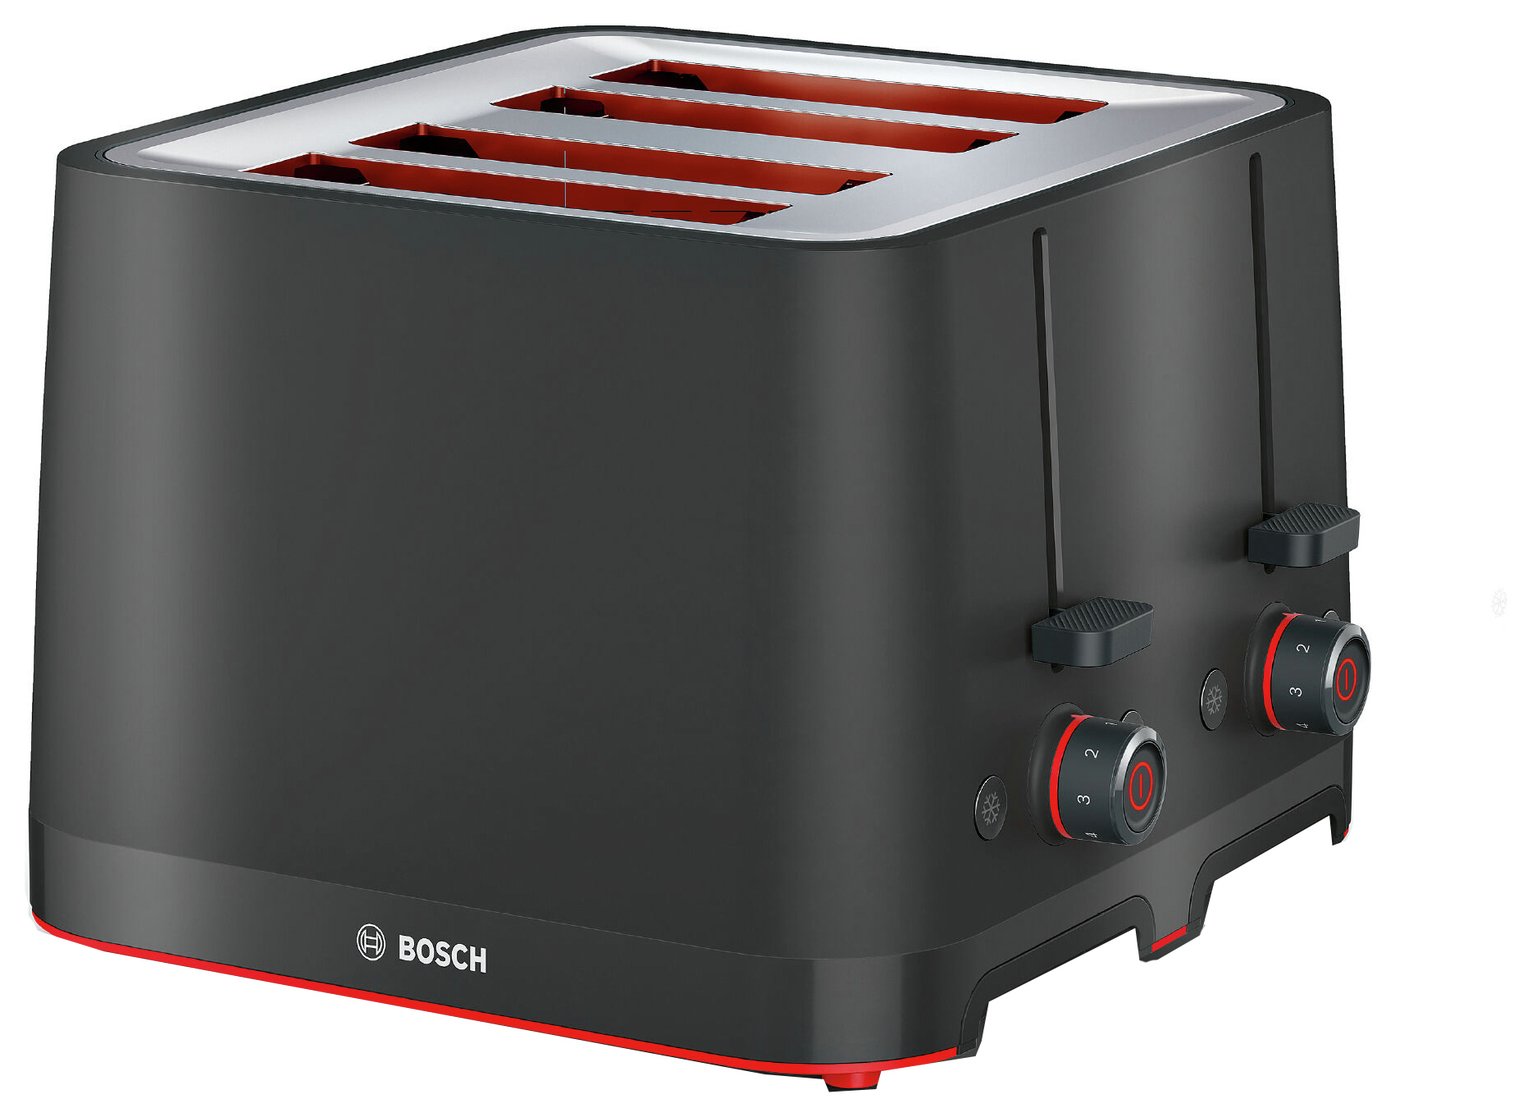 Bosch TAT3M143GB MyMoment Infuse 4 Slice Toaster - Black